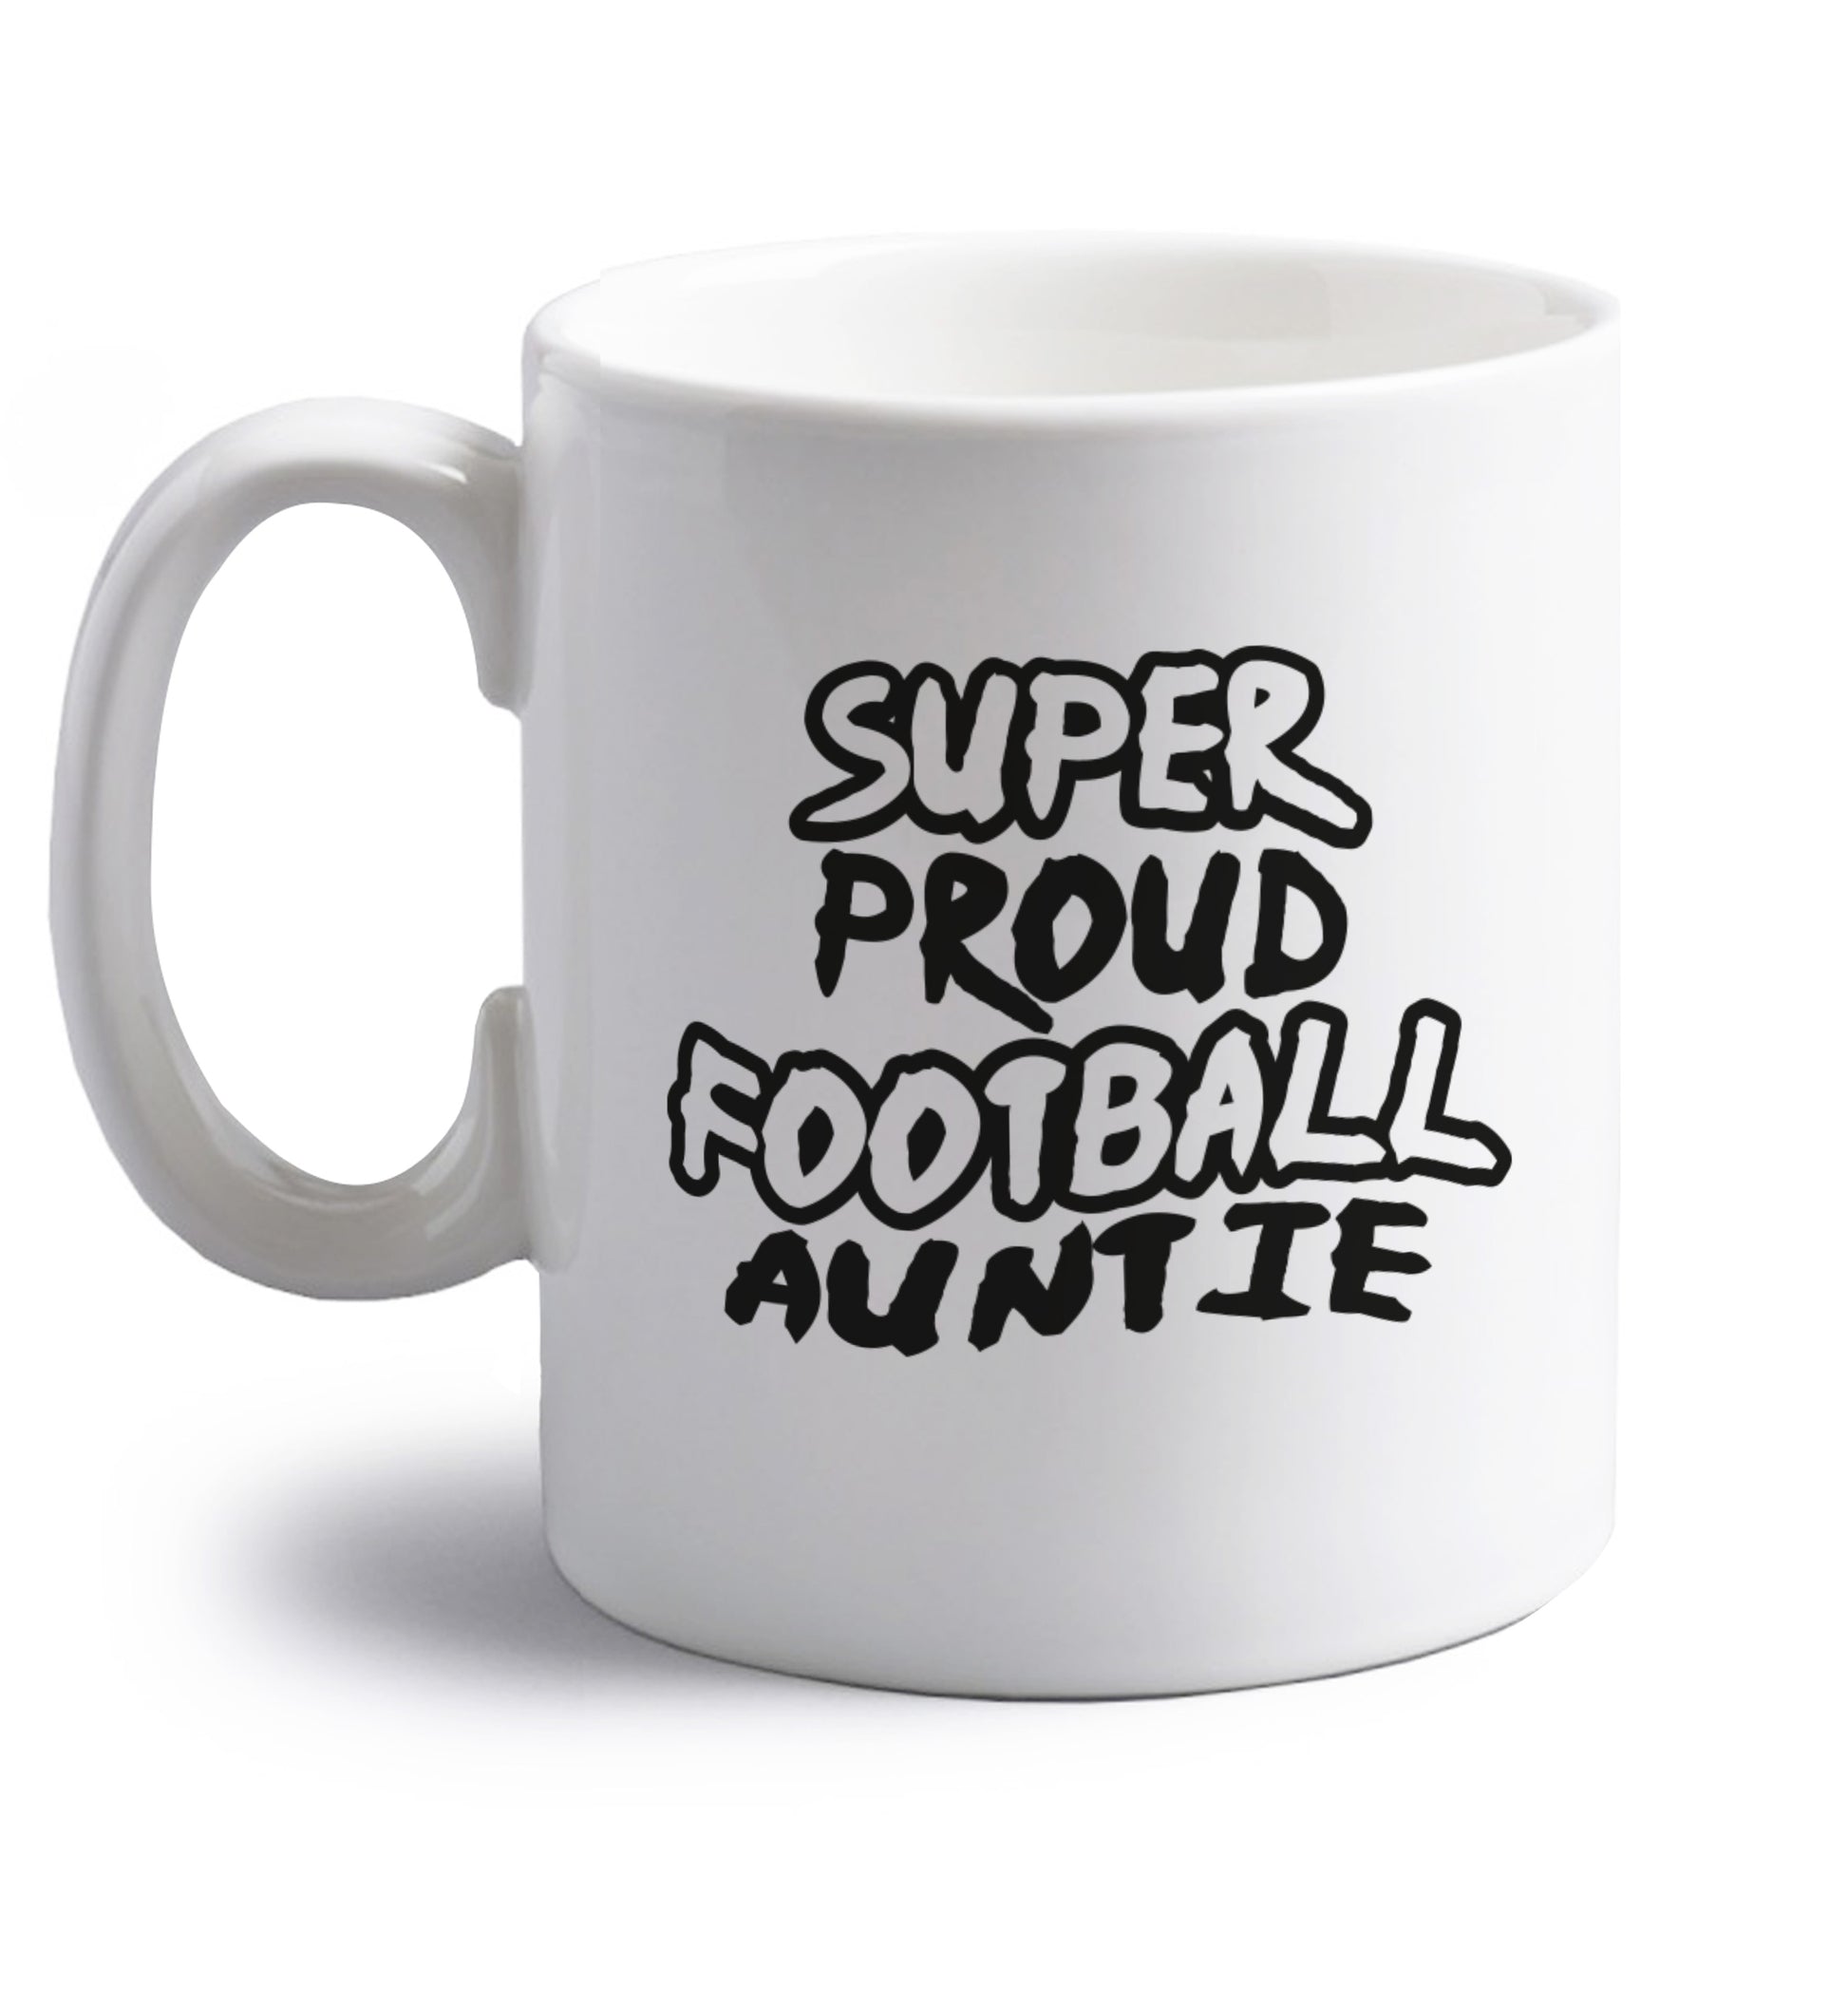 Super proud football auntie right handed white ceramic mug 